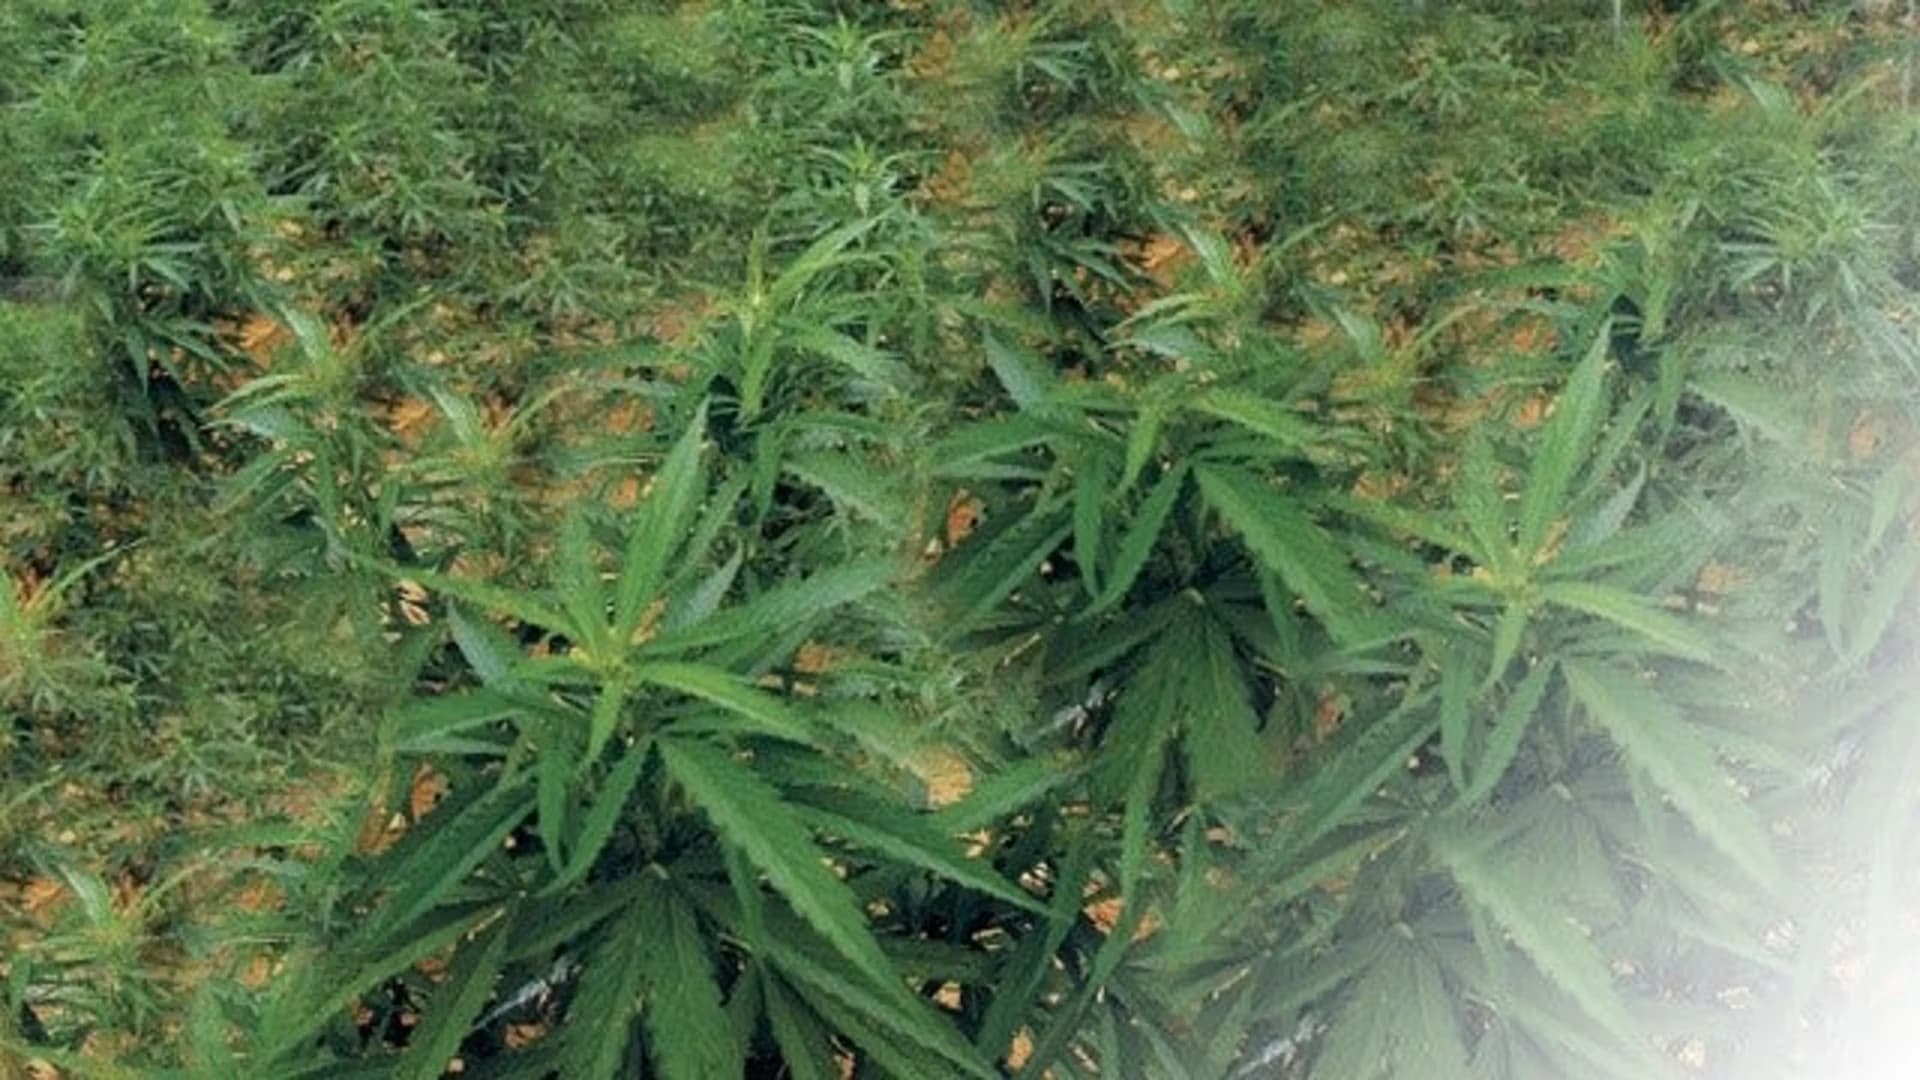 Police find marijuana growing facility, 8 arrested